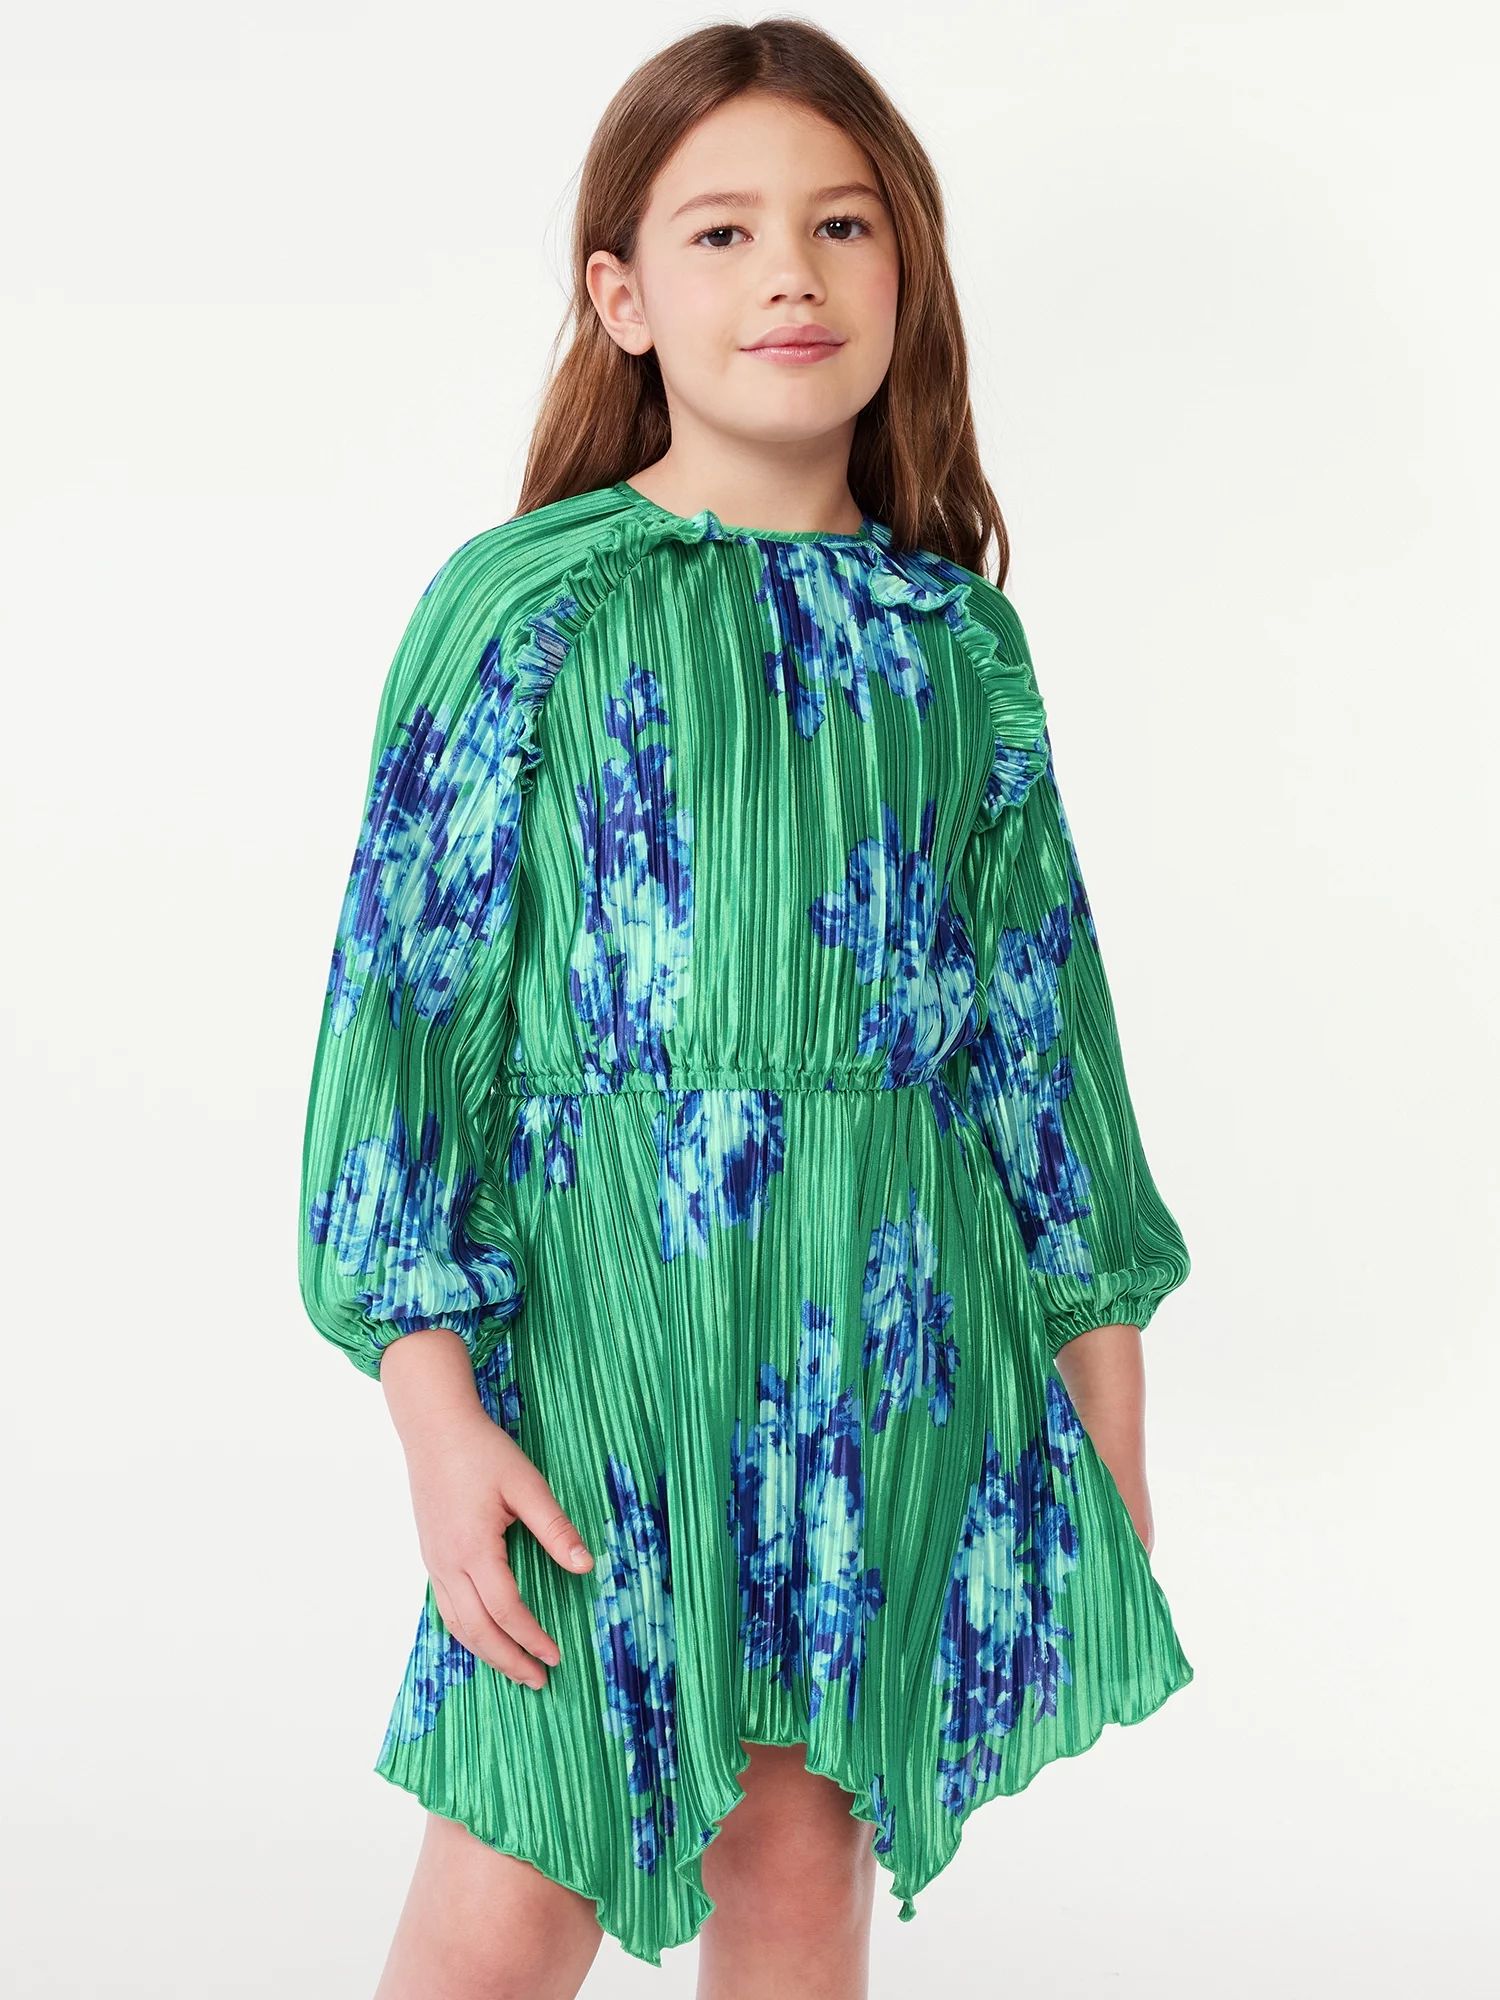 Scoop Girls Long Sleeve Handkerchief Hem Dress, Sizes 4-12 | Walmart (US)